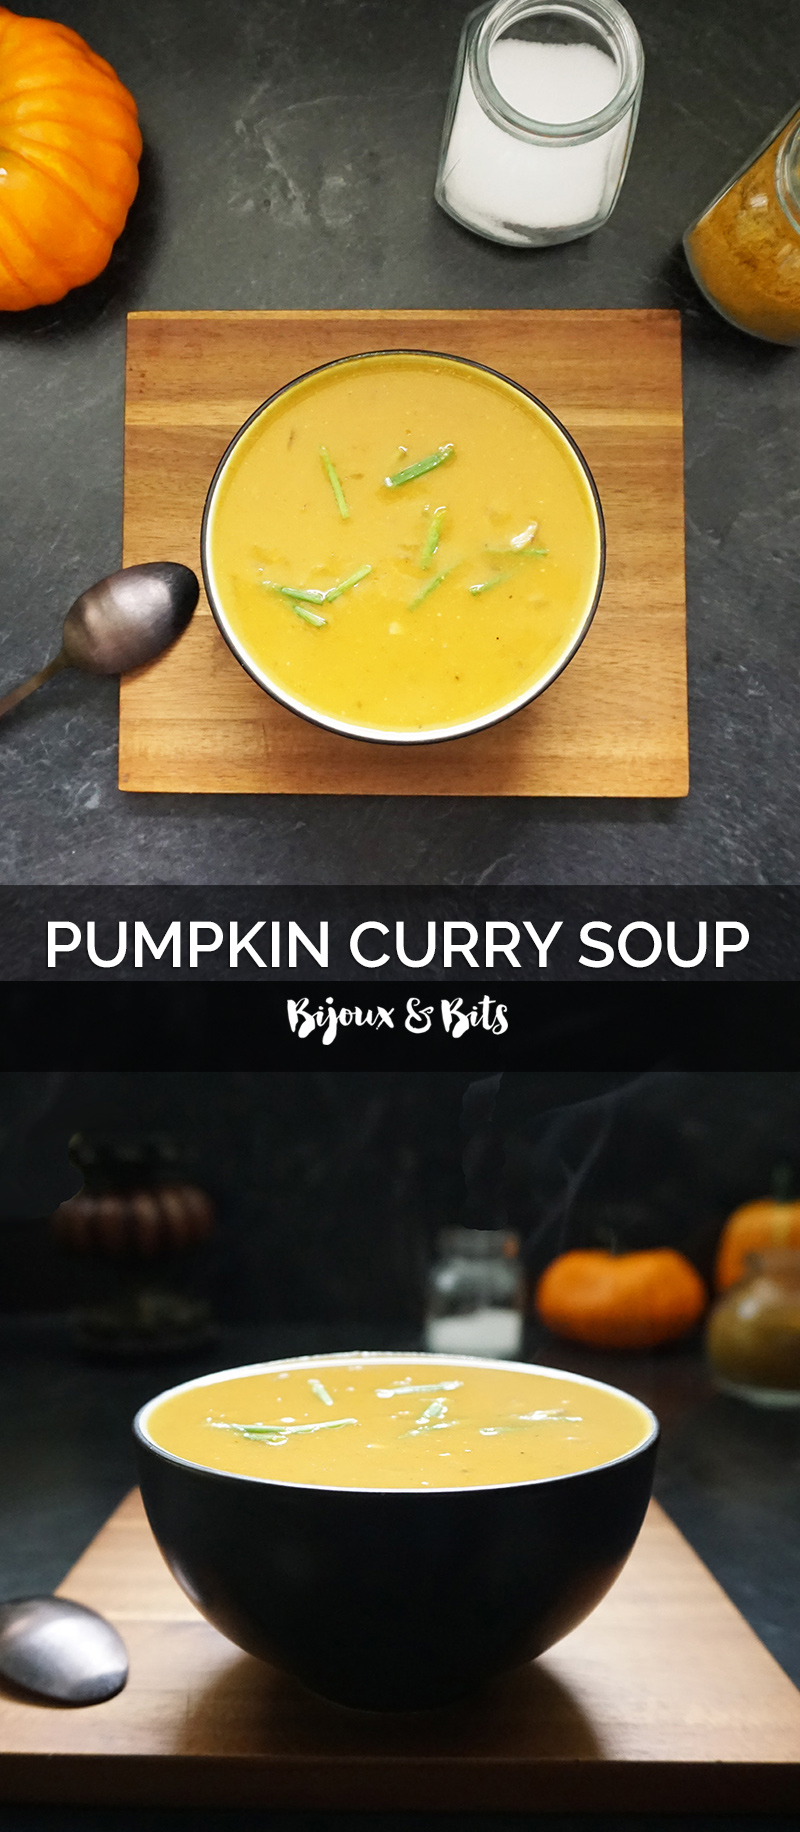 Pumpkin curry soup recipe from @bijouxandbits